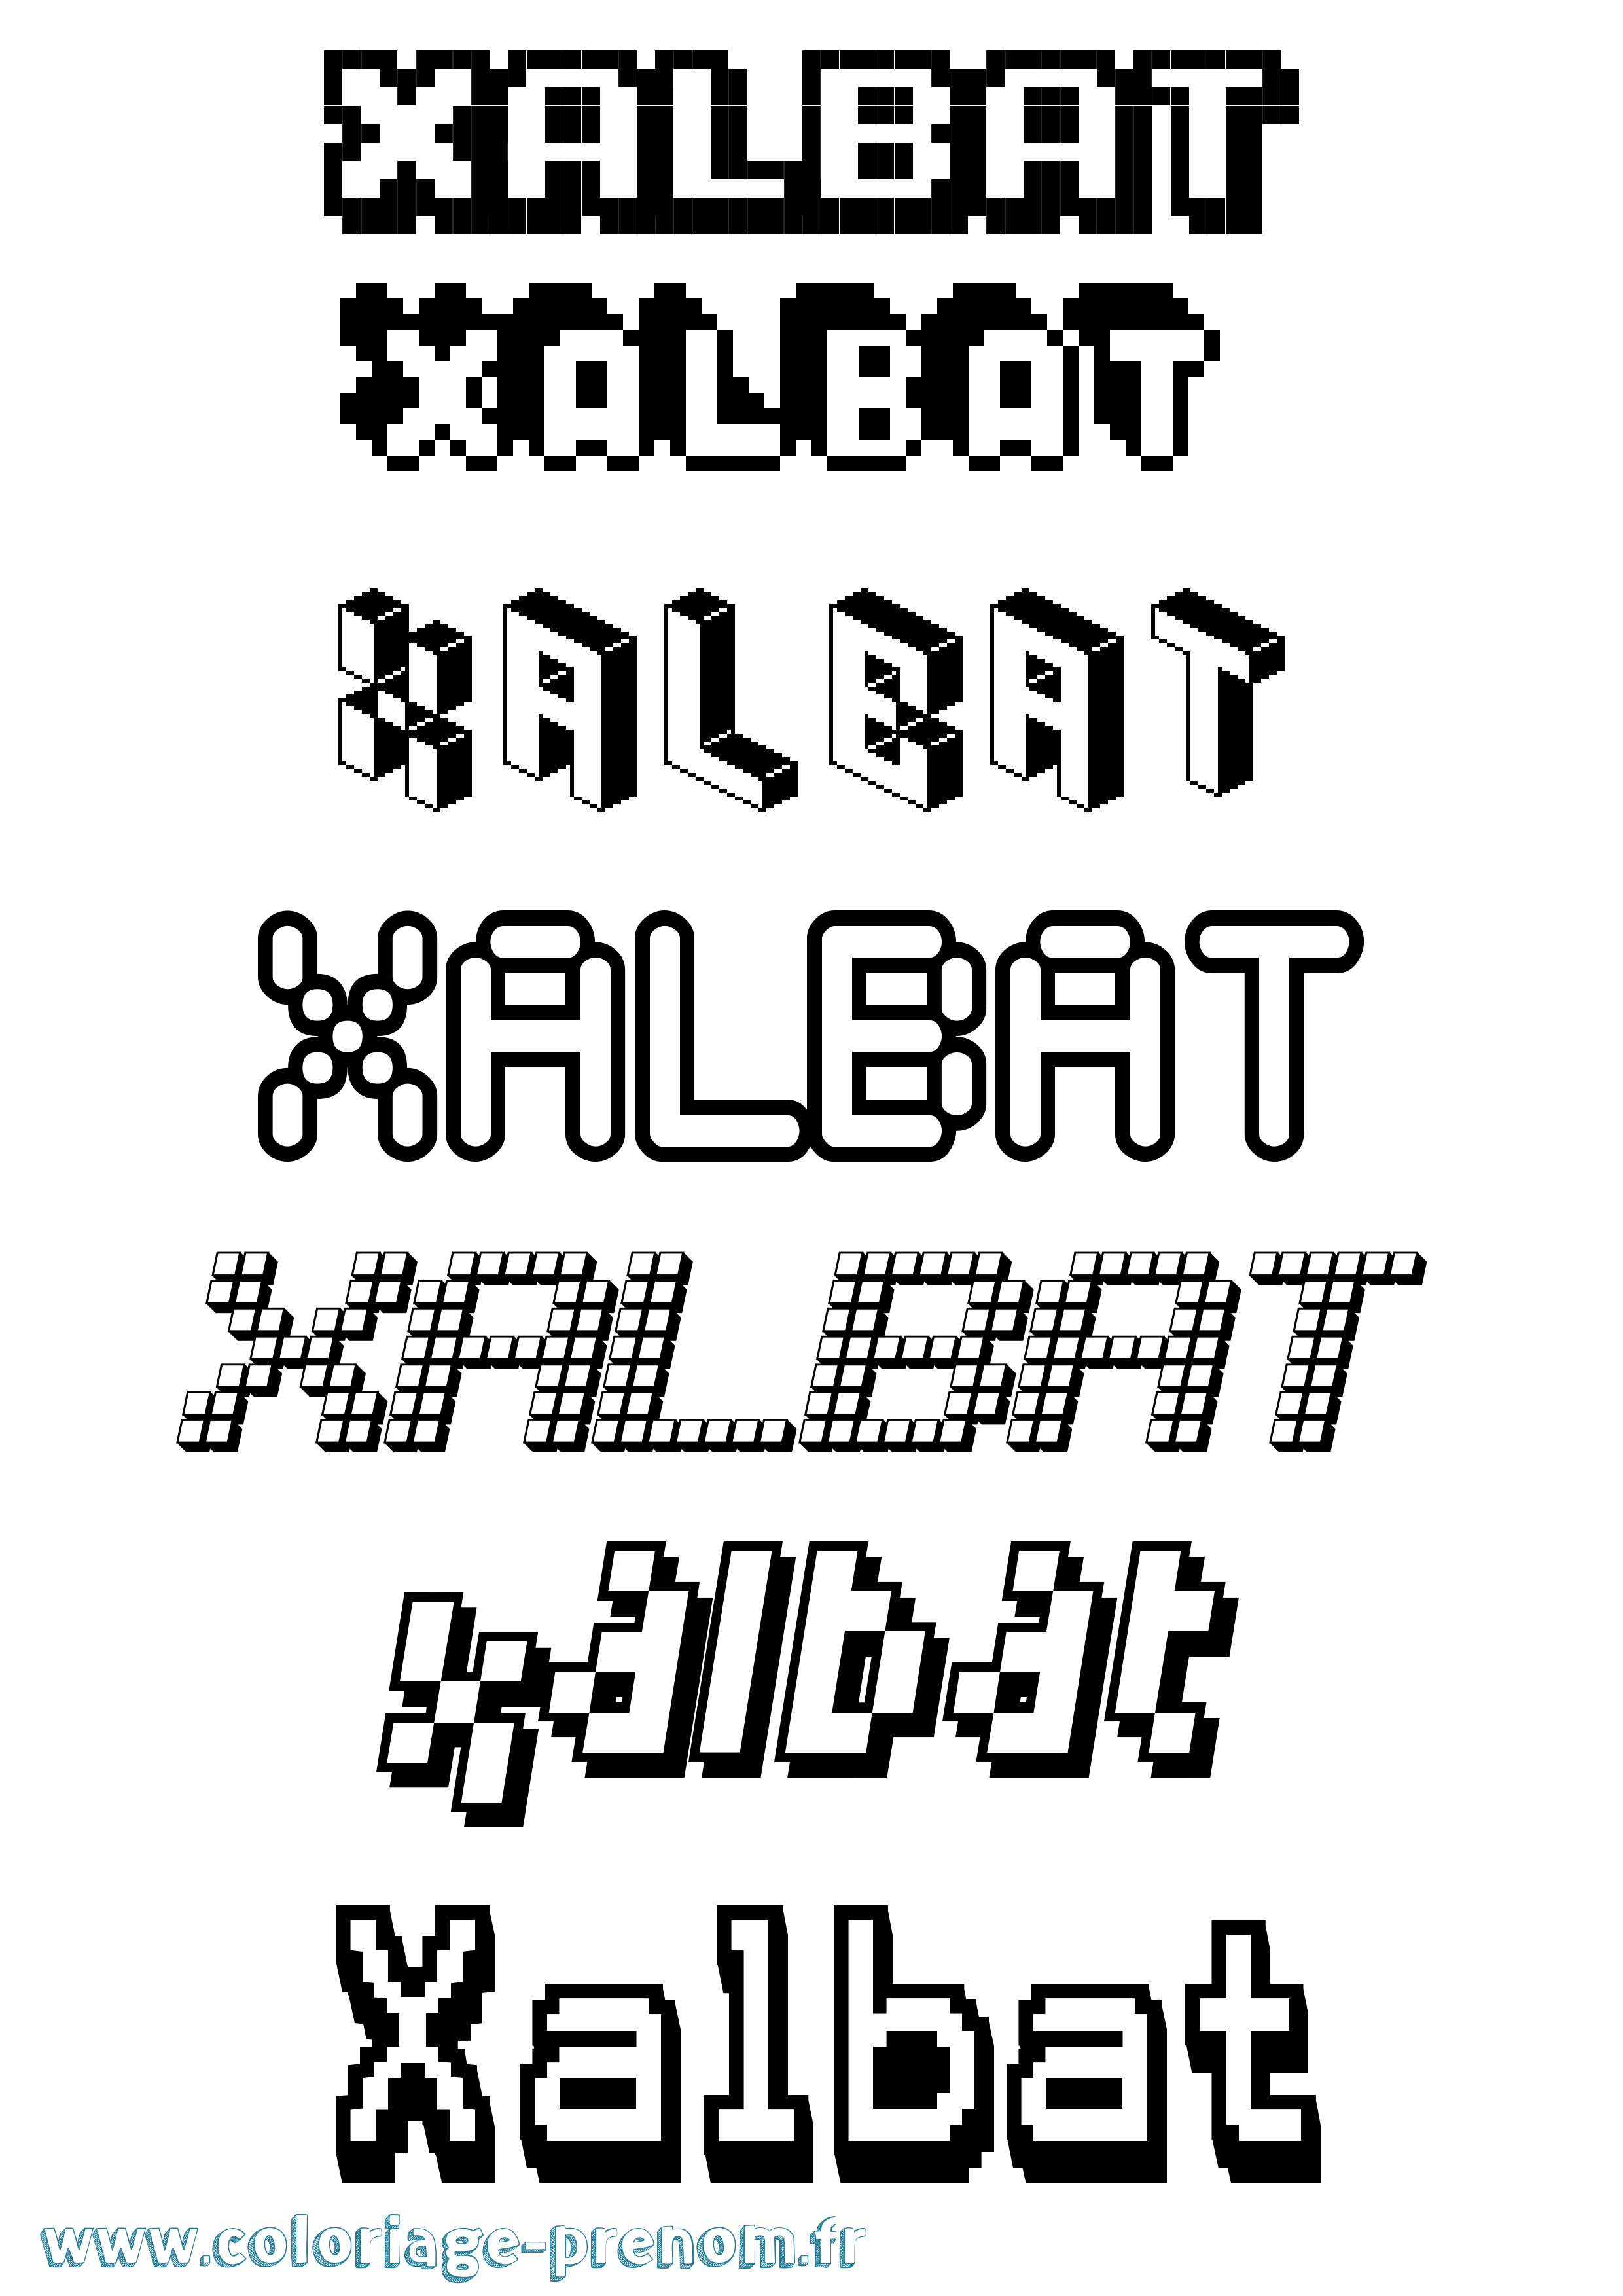 Coloriage prénom Xalbat Pixel